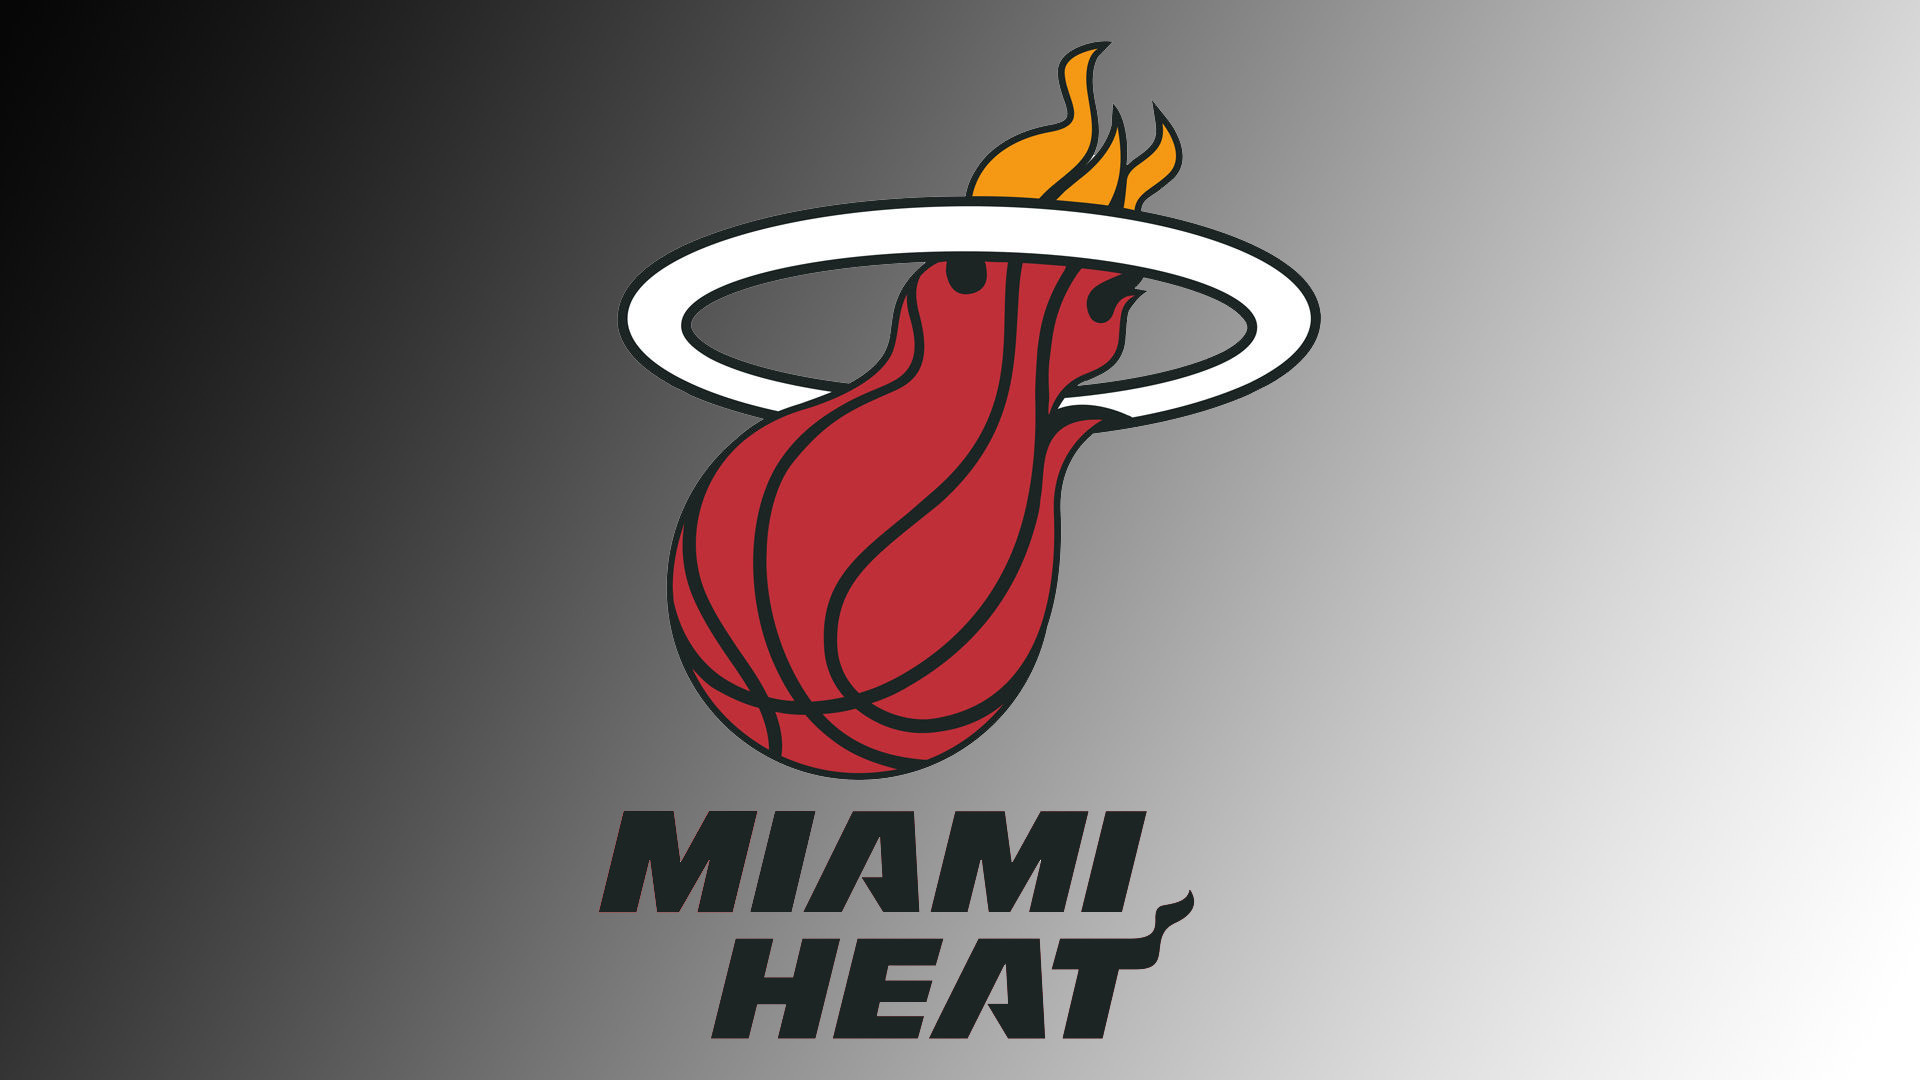 1920x1080 Miami Heat Logo Wallpaper HD 21 hd background hd screensavers hd .